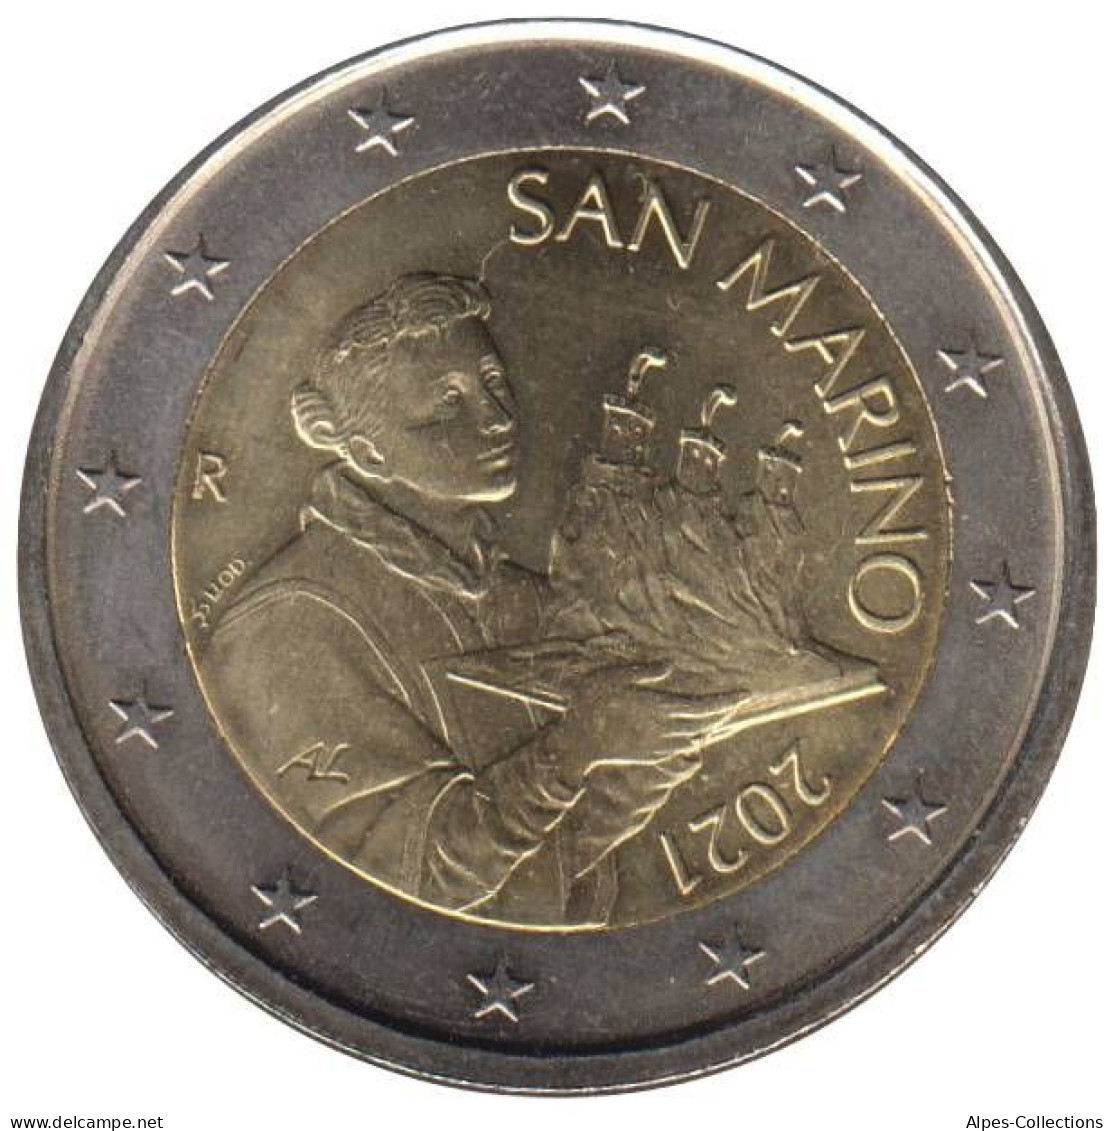 SA20021.3 - SAINT MARIN - 2 Euros - 2021 - San Marino